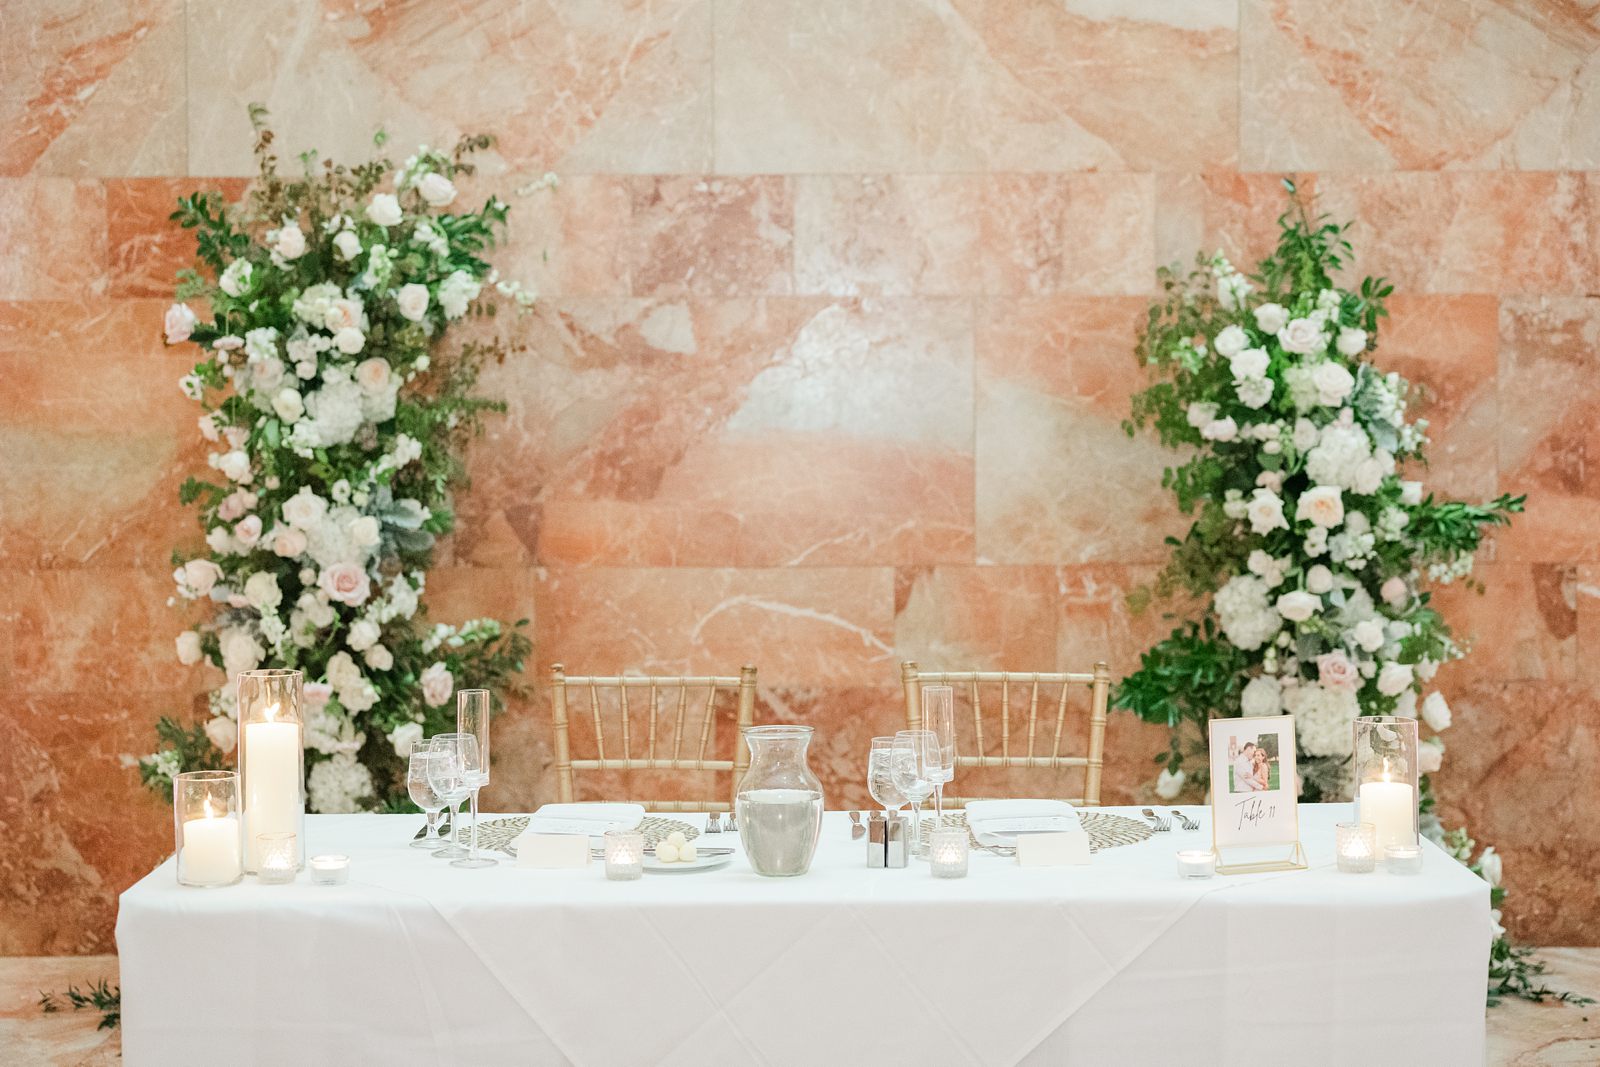 Marble Hall Reception Decor at Summer VMFA Wedding by richmond wedding photographer Kailey Brianne Photography  